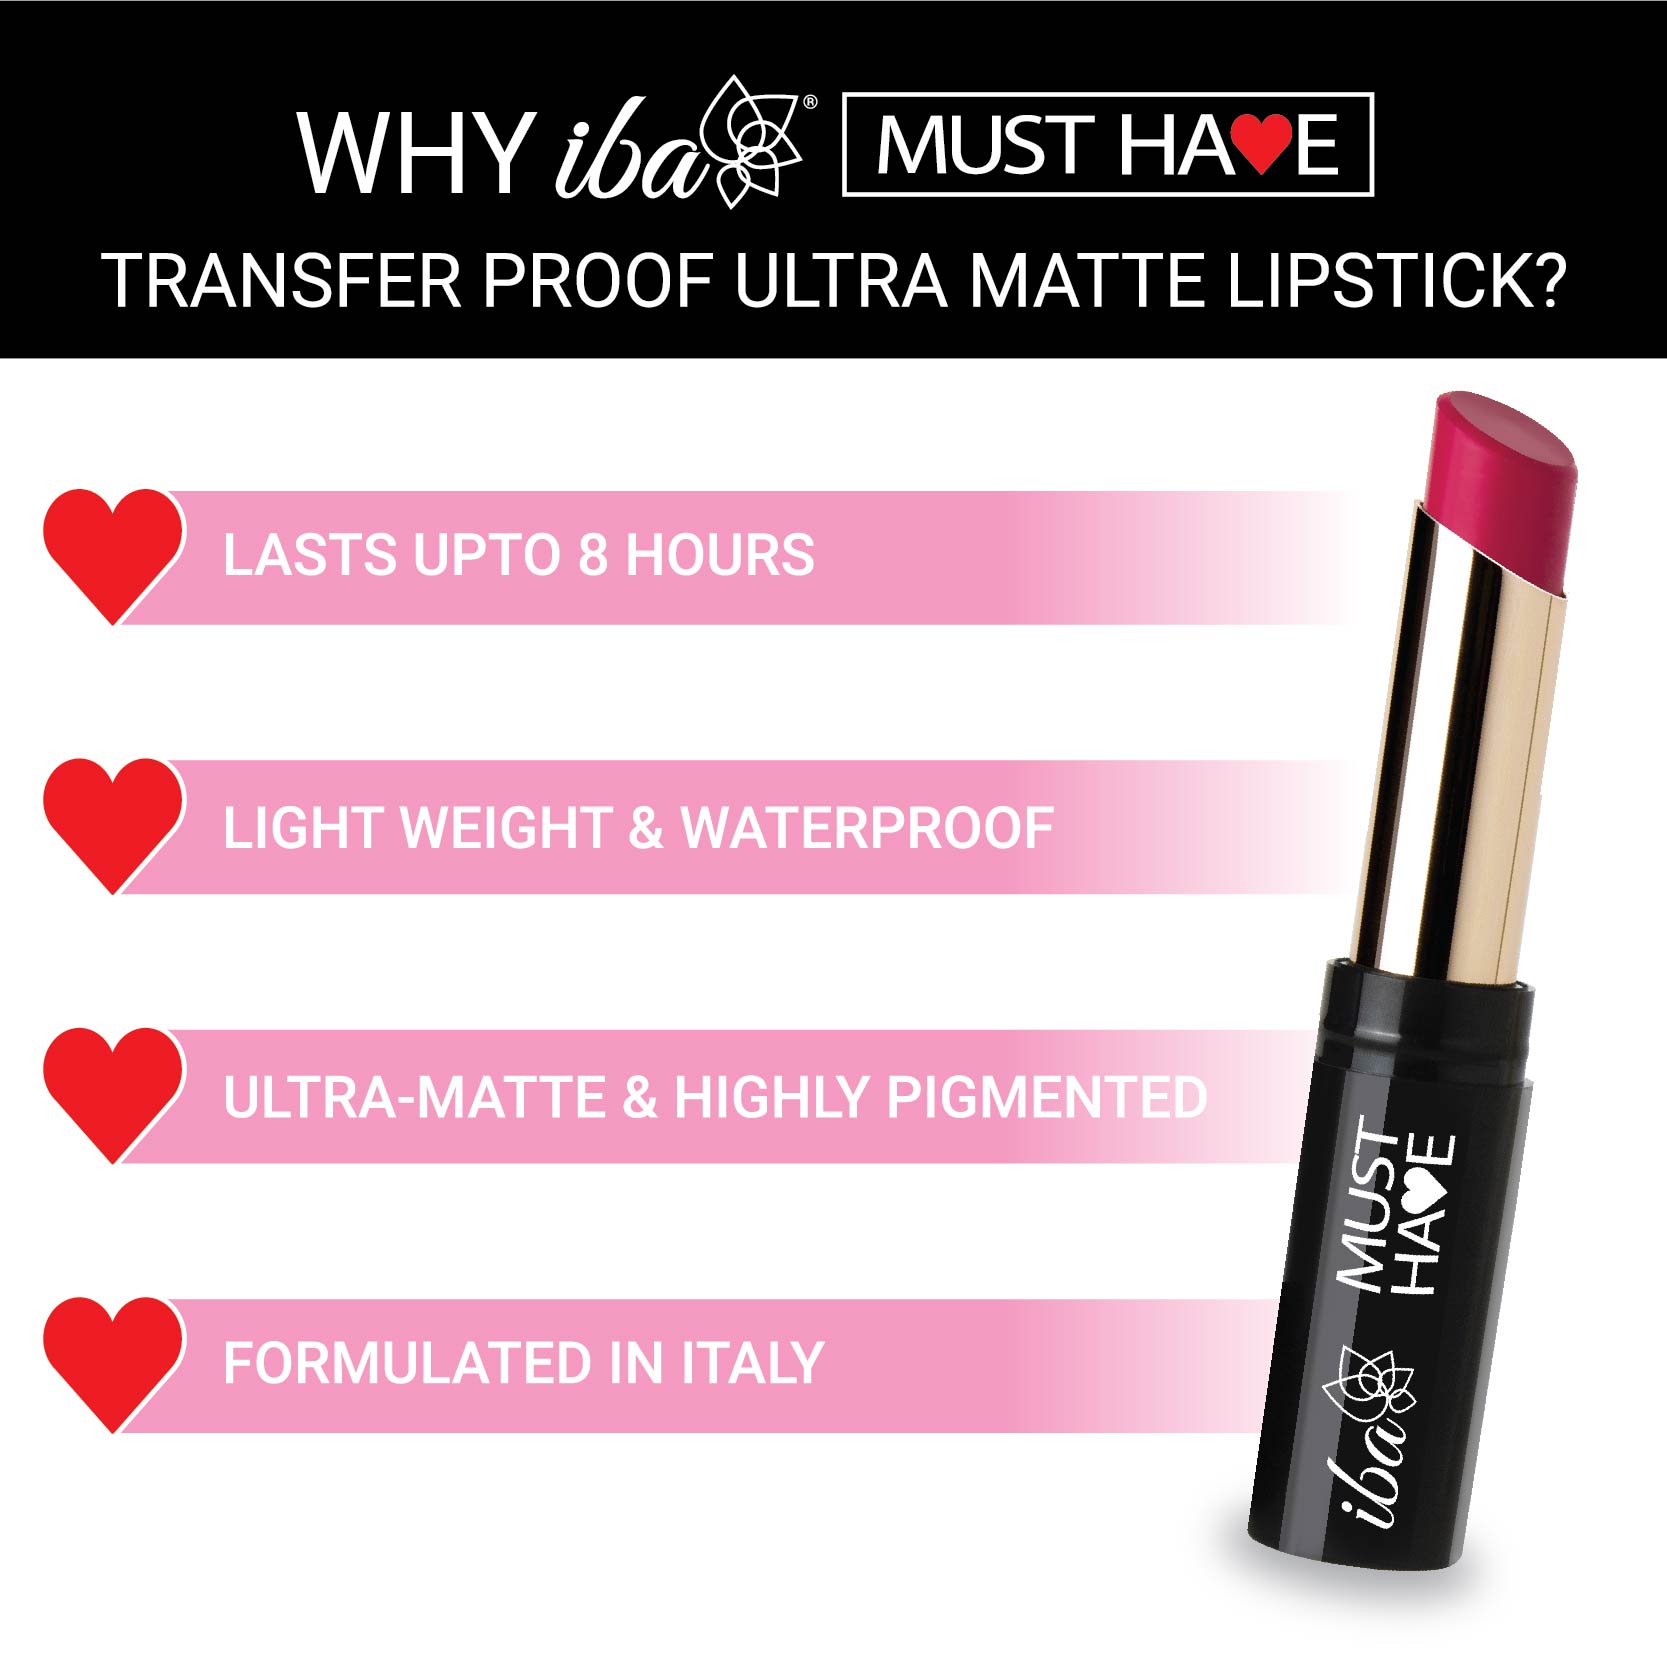 Iba Must Have Transfer Proof Ultra Matte Lipstick Description